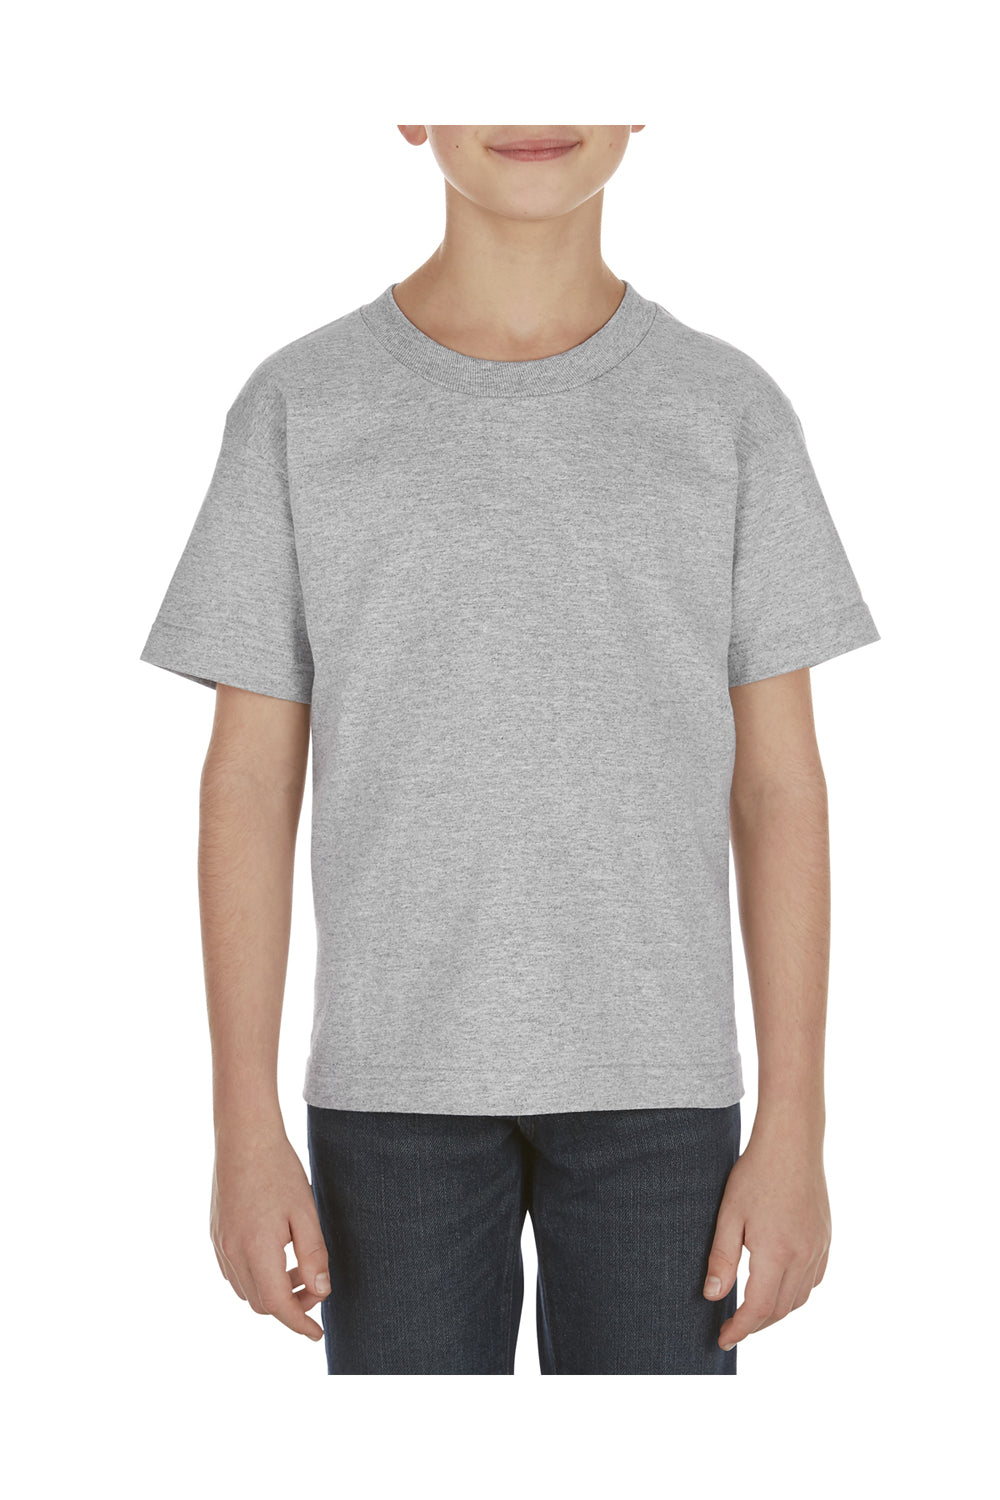 Alstyle AL3381 Youth Short Sleeve Crewneck T-Shirt Heather Grey Front